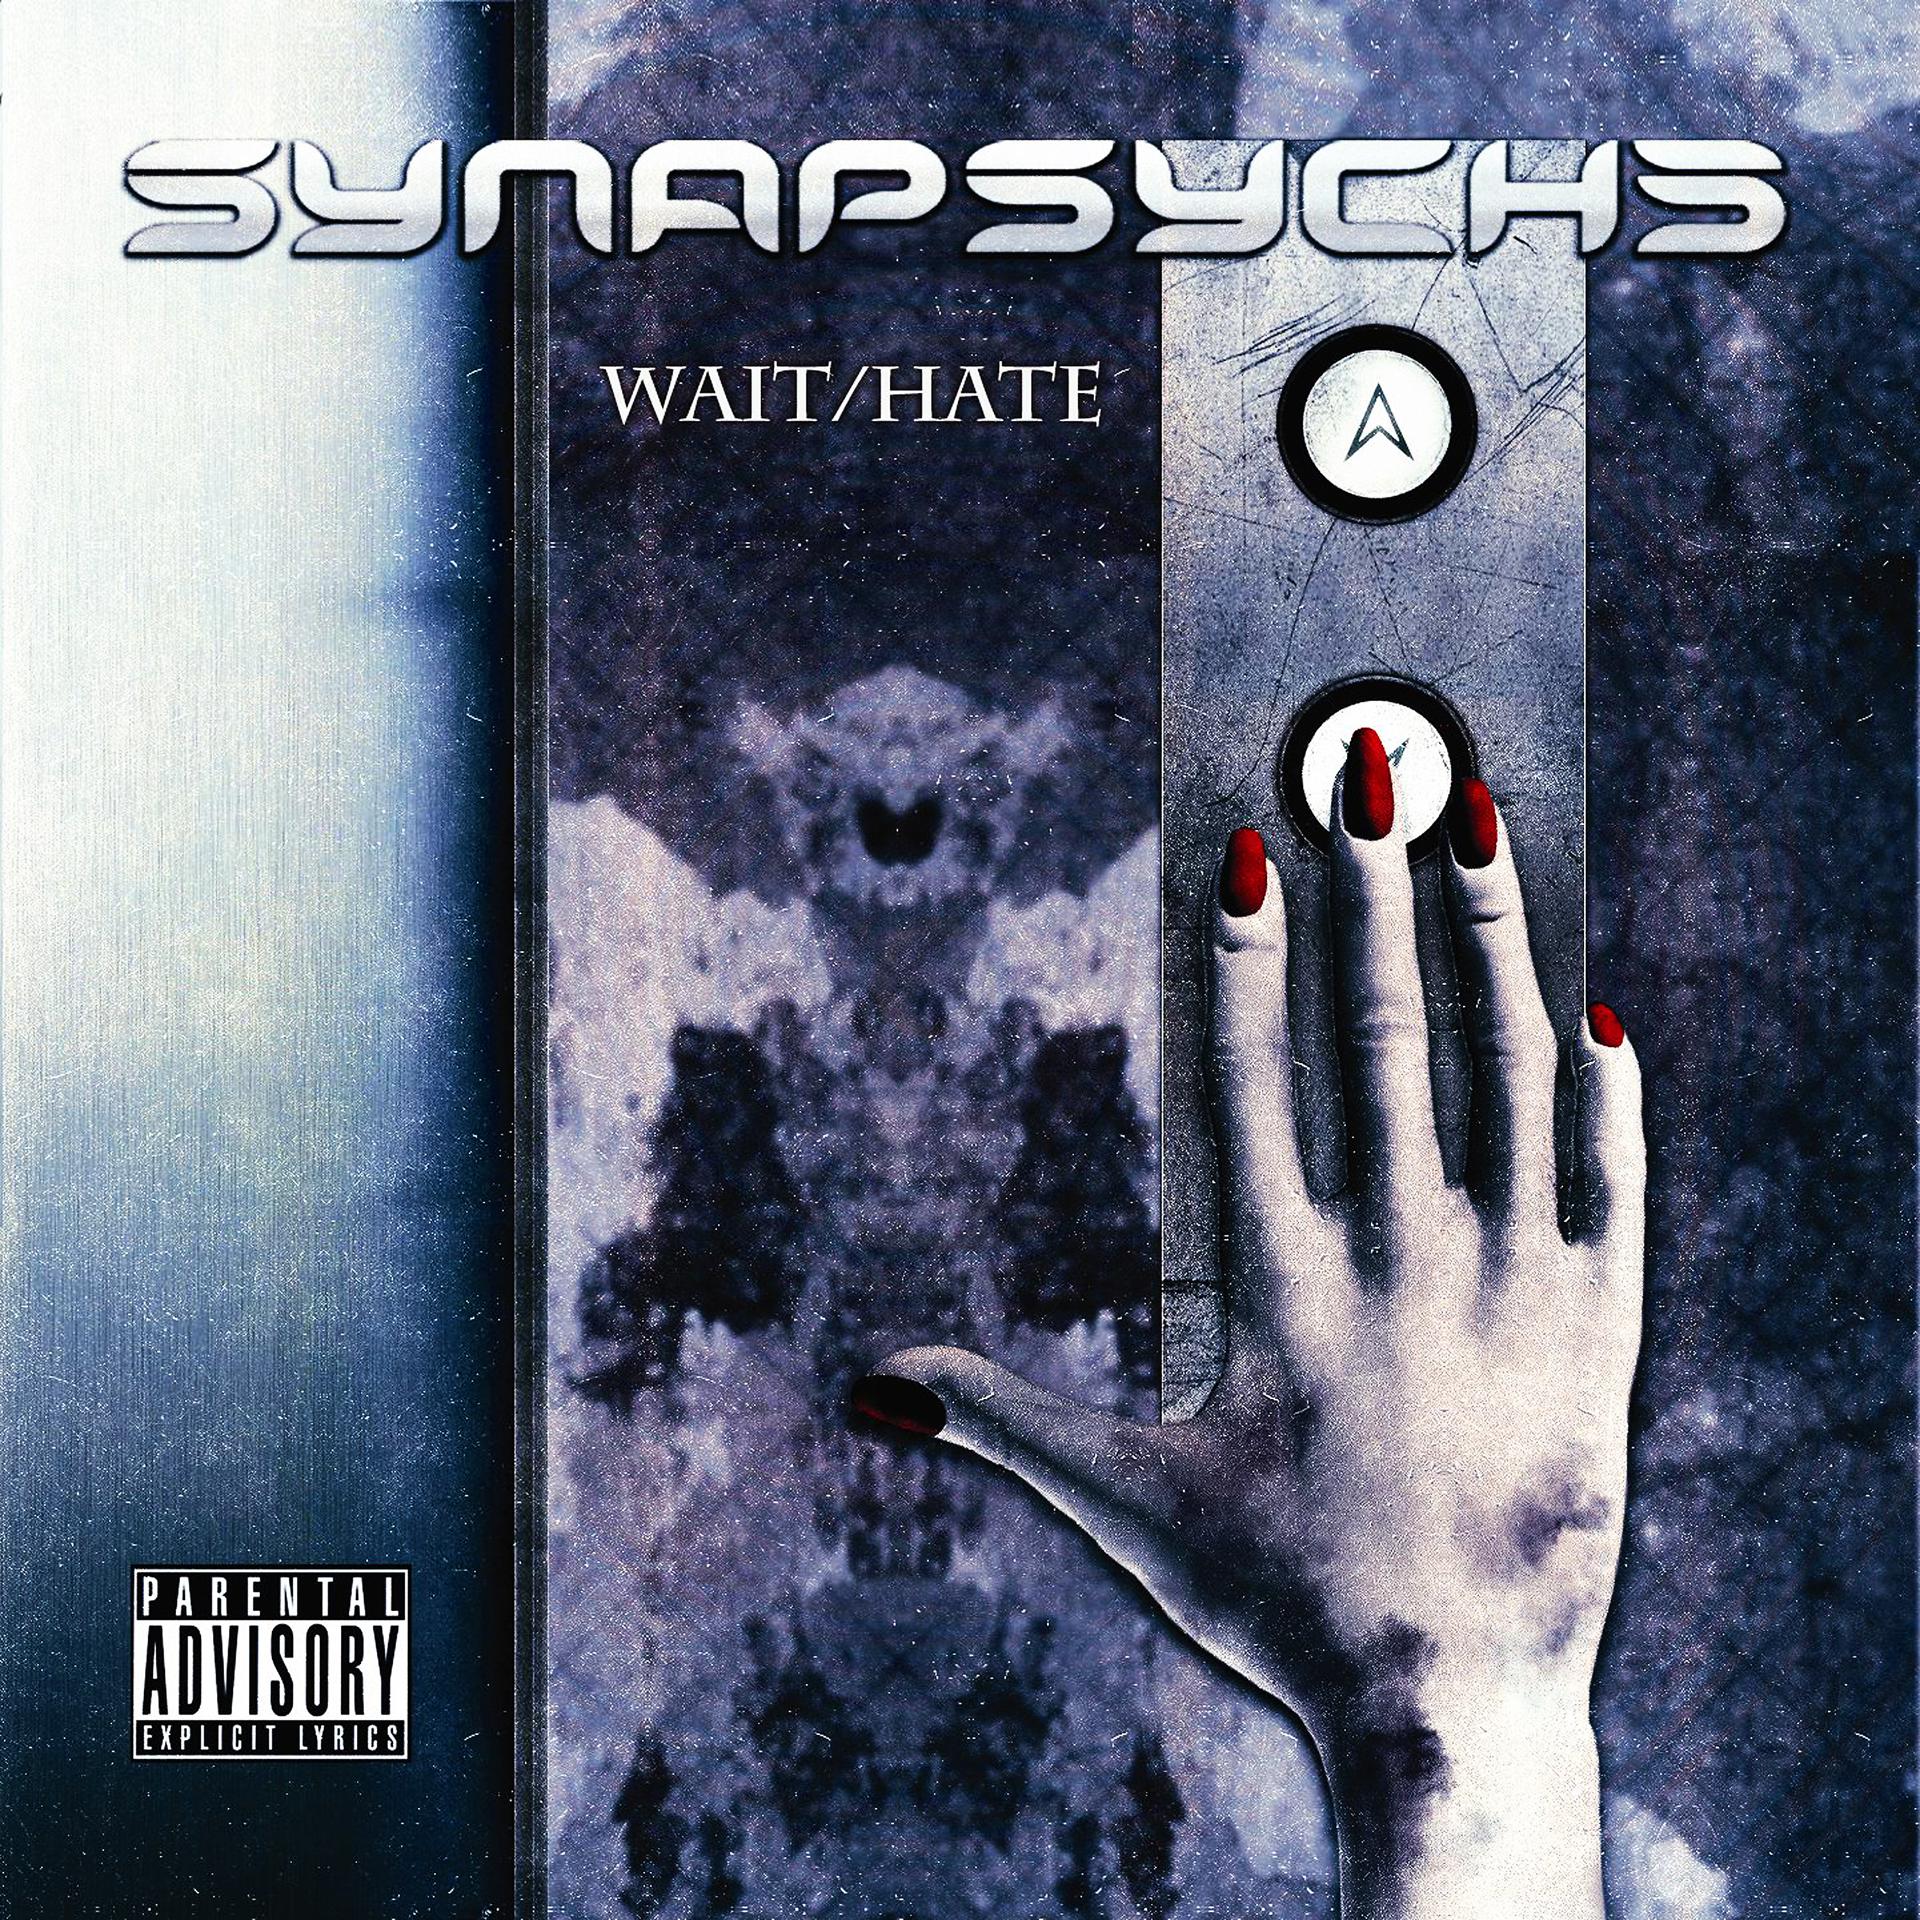 Hate waiting. Synapsyche. Earshot wait обложка. Synapsyche EBM logo Music Band.